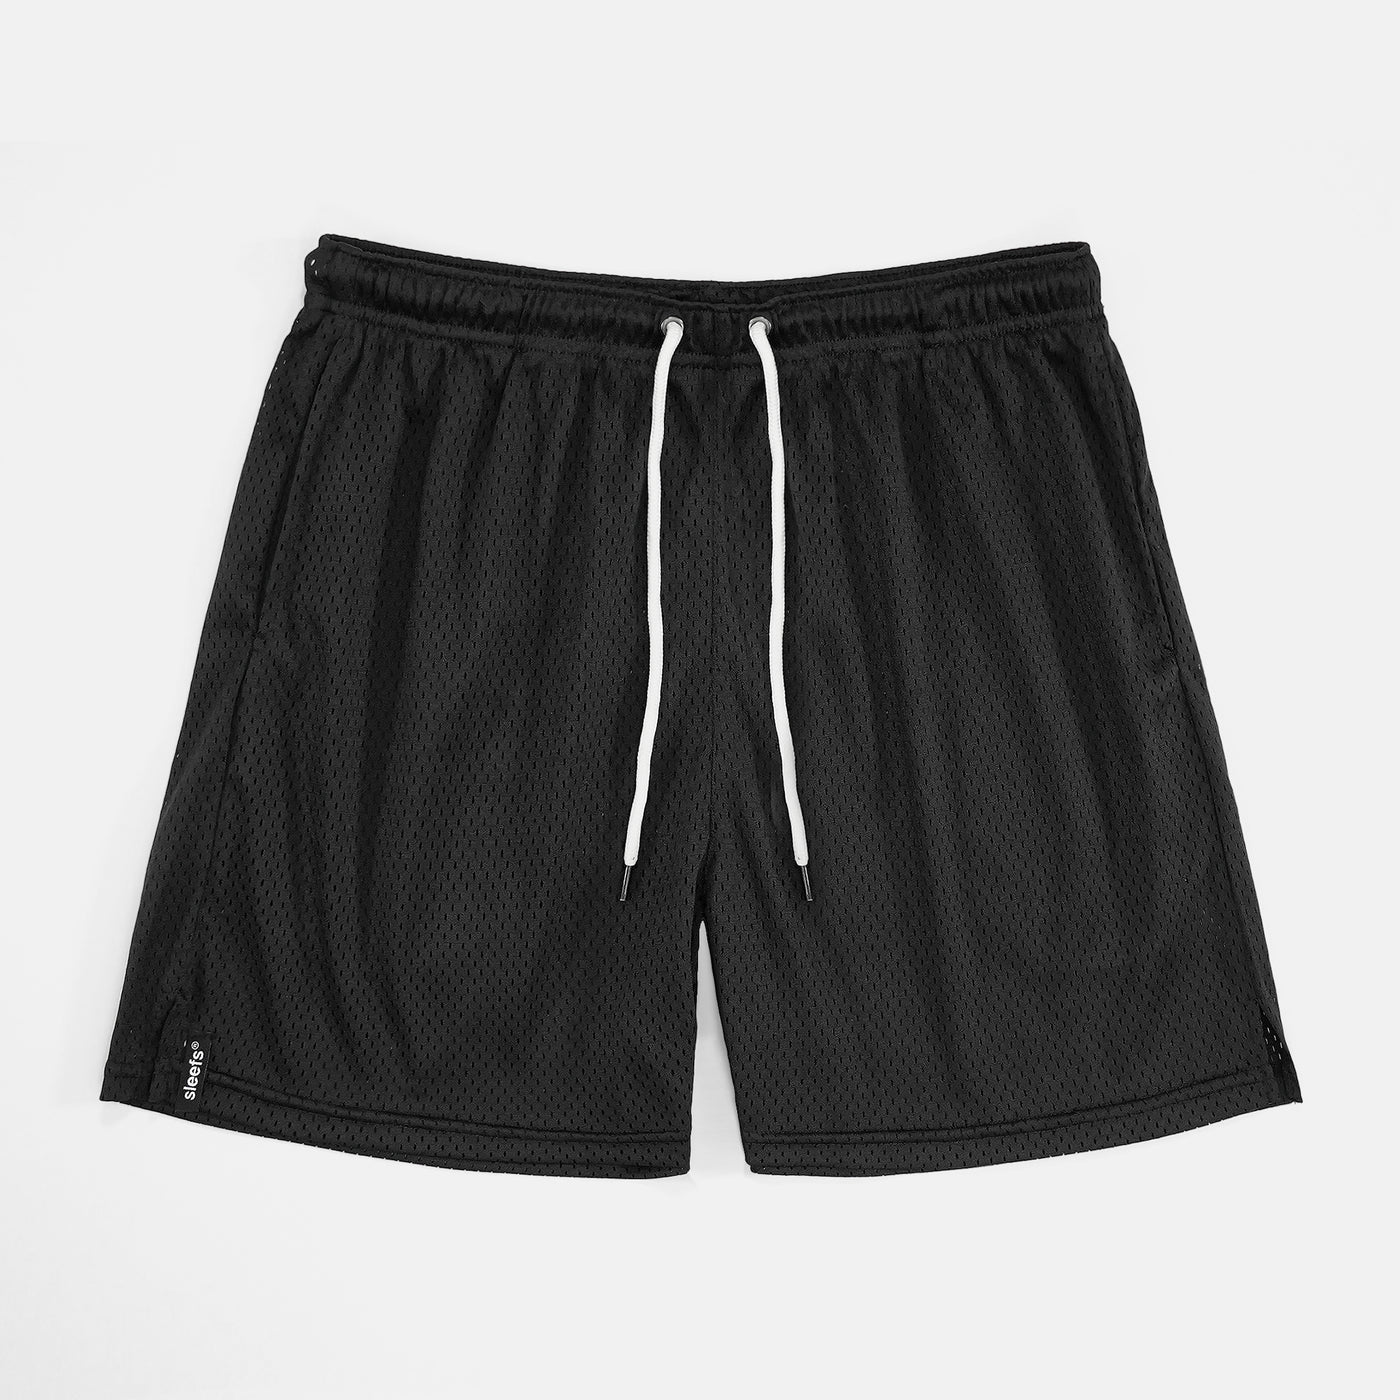 Basic Black Shorts - 7"